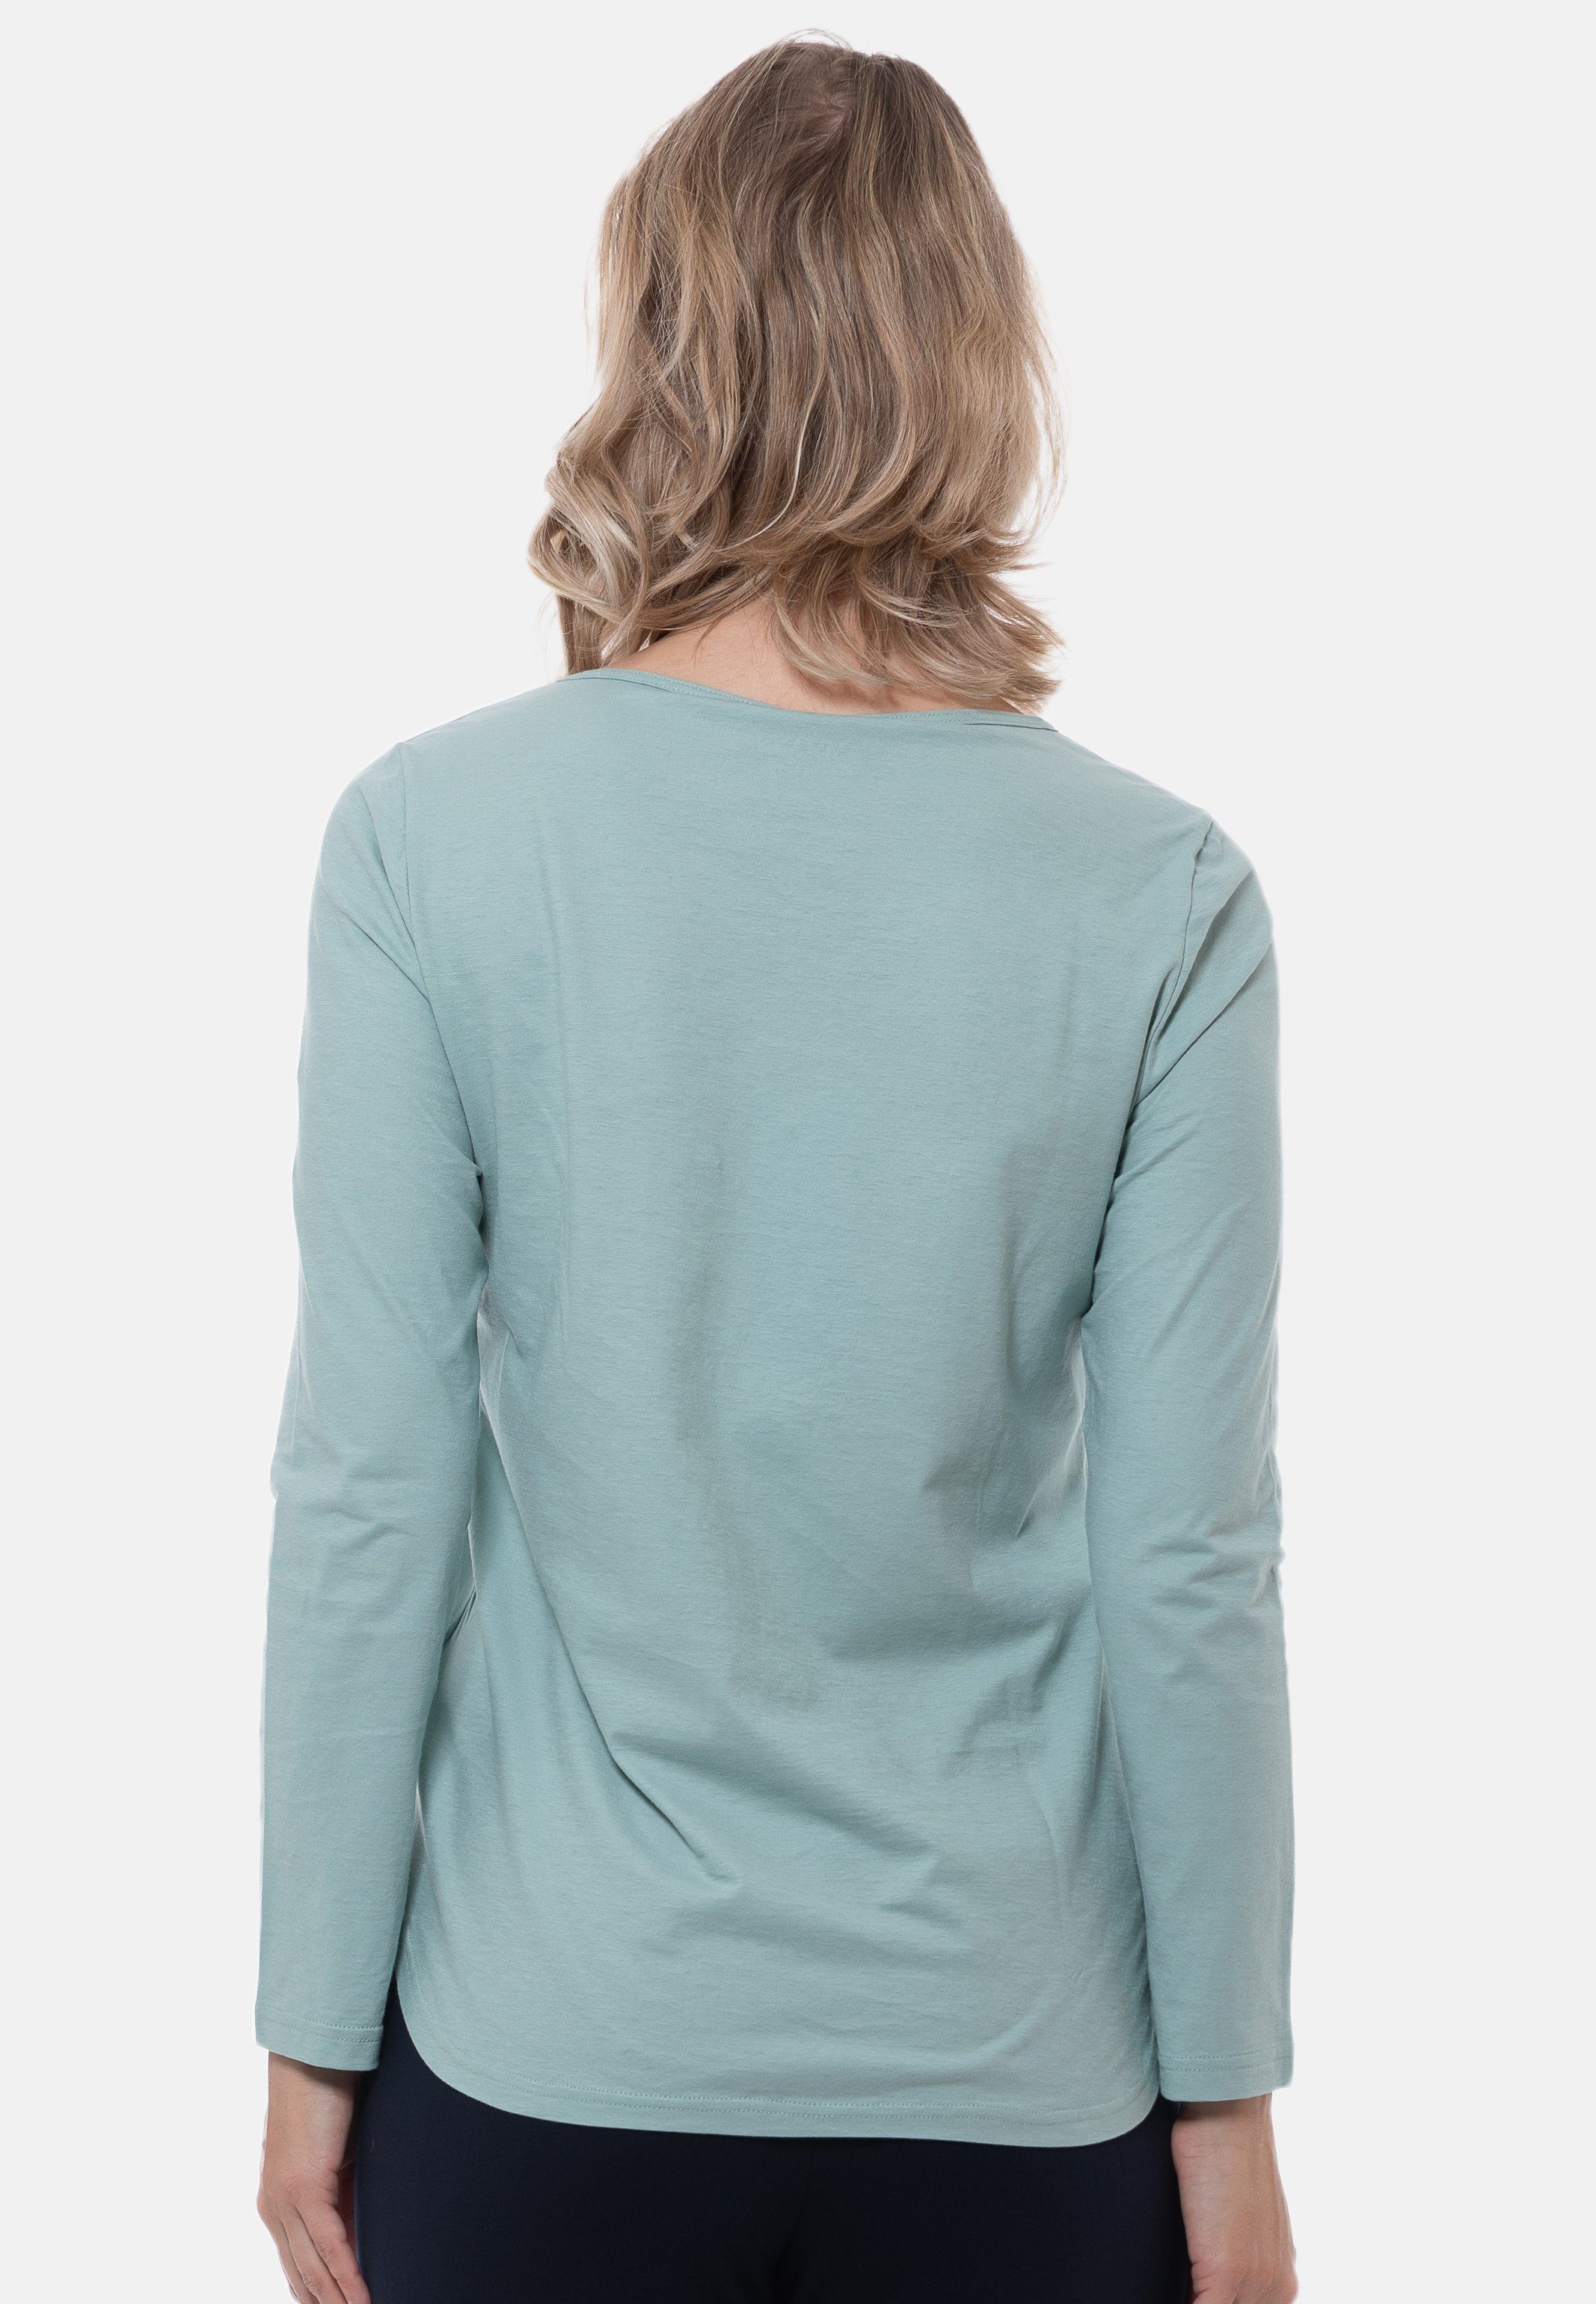 - Cotton Baumwolle Ammann Organic Langarm Schlafanzug Mix Pyjamaoberteil Match - - (1-tlg) Shirt &